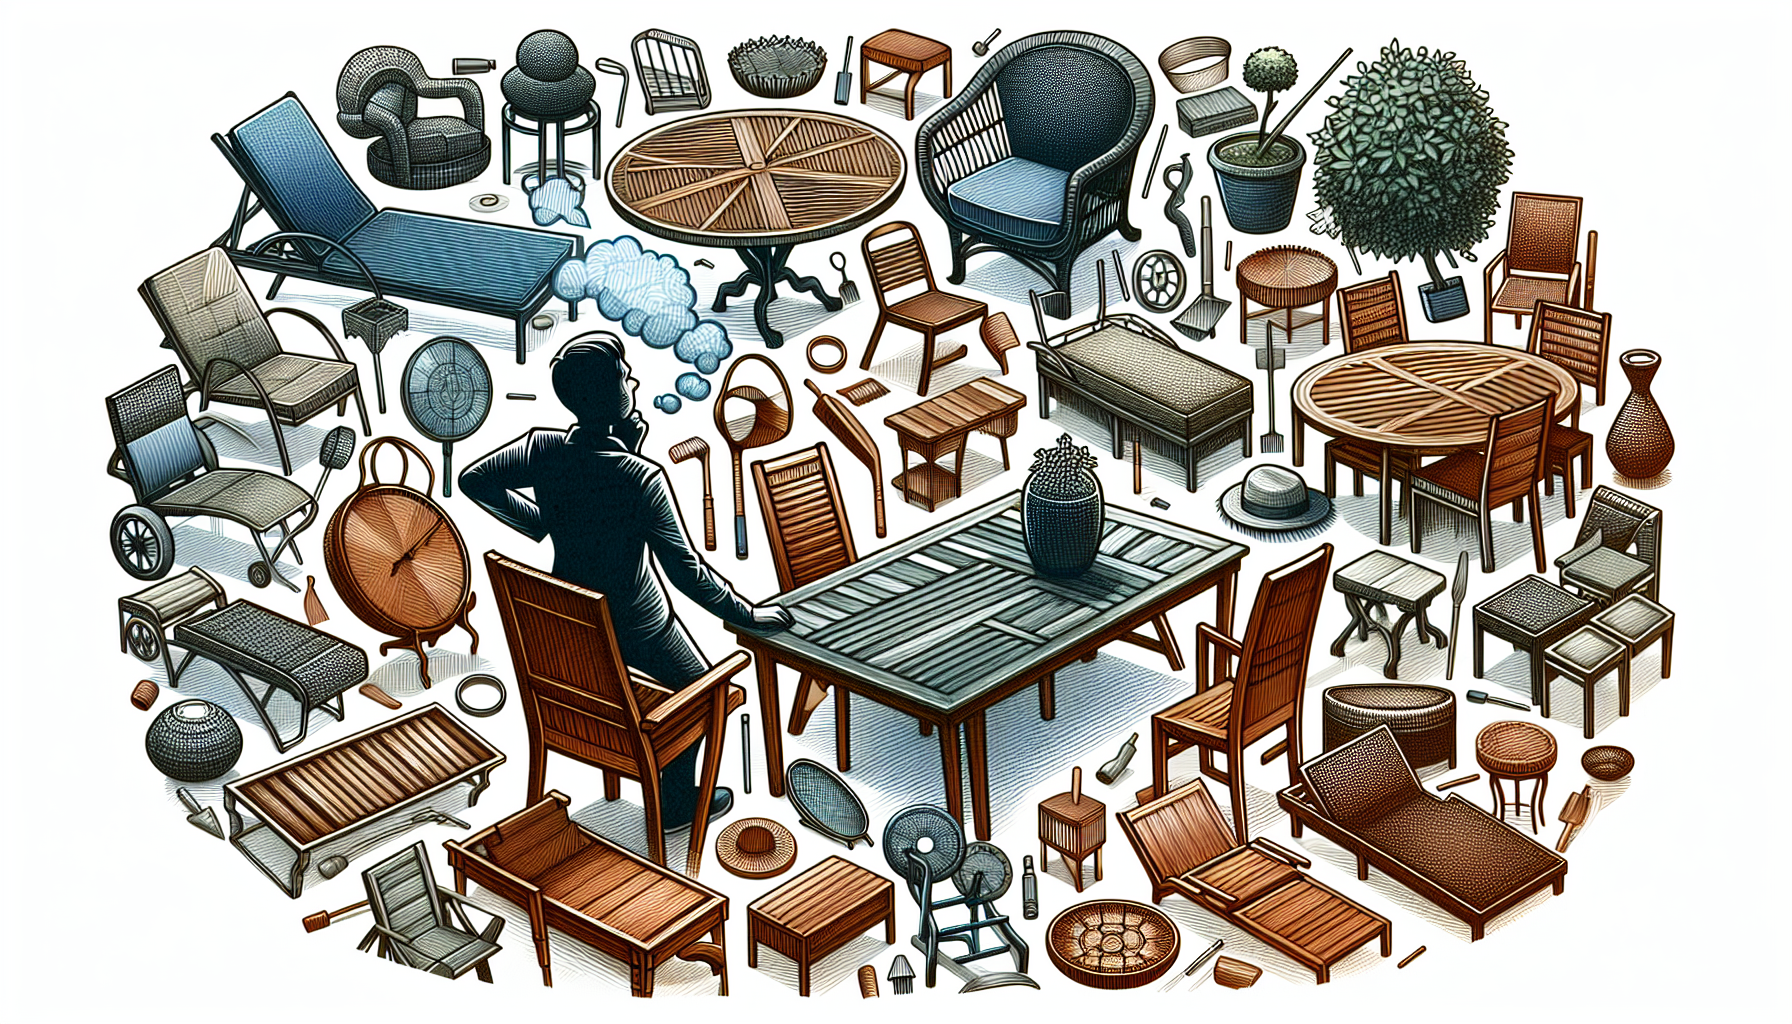 Selecting the ideal garden furniture set